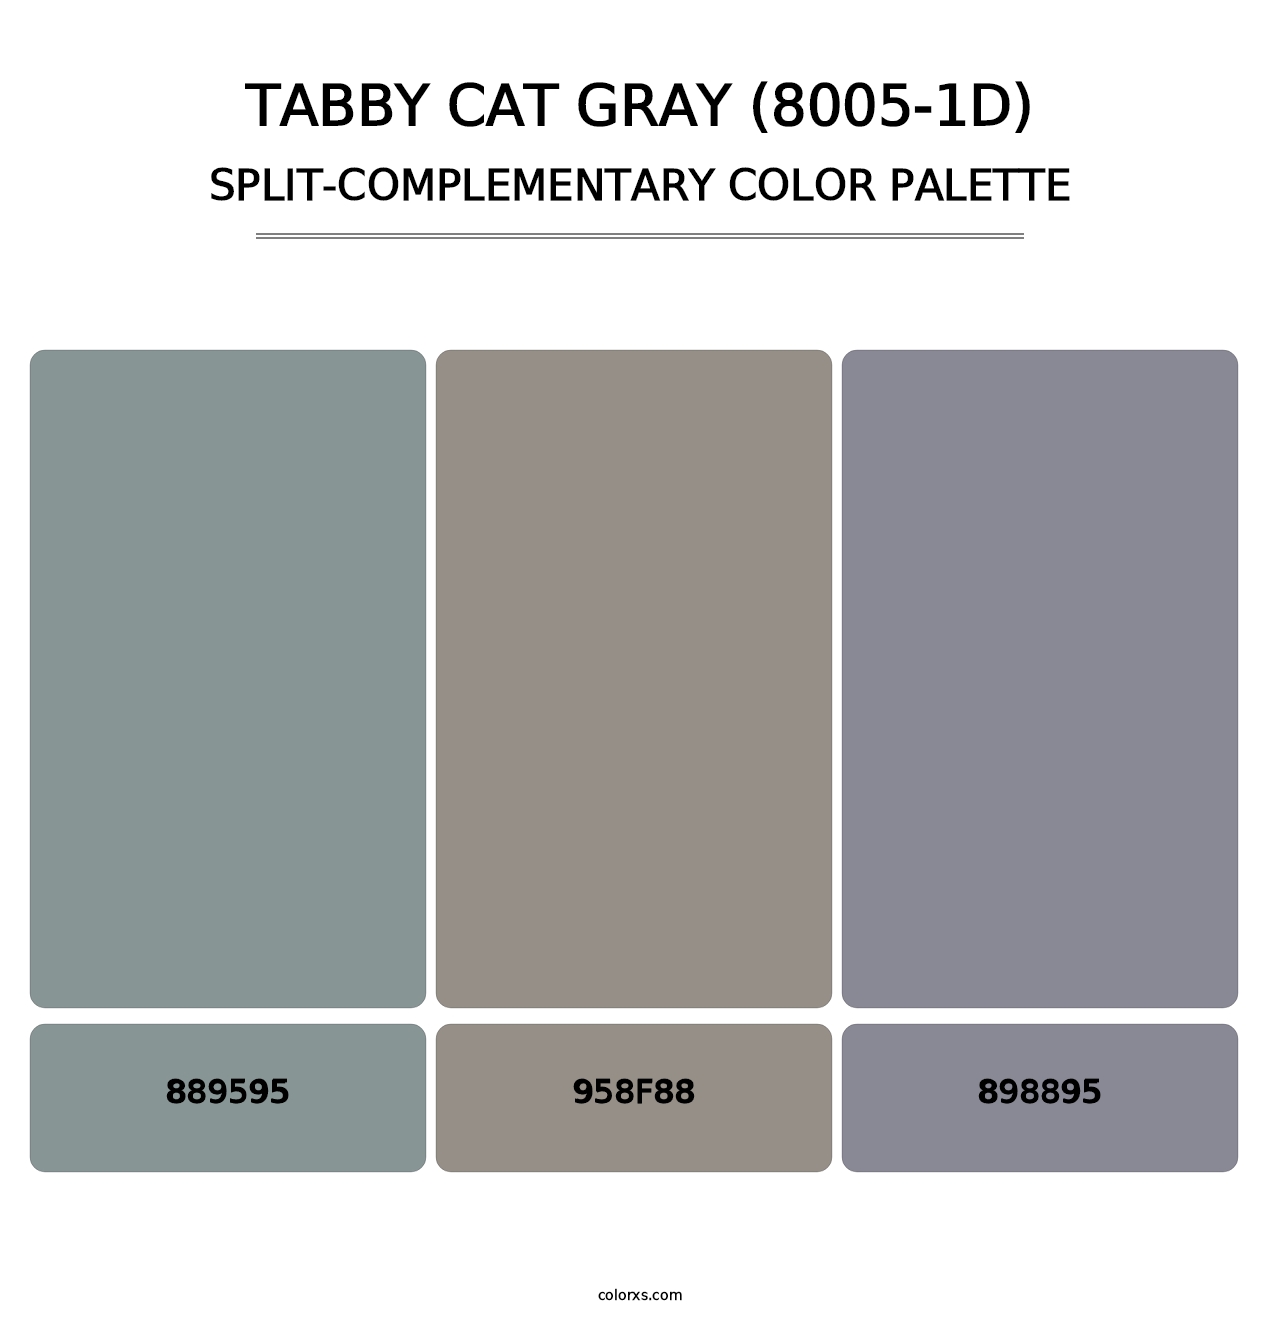 Tabby Cat Gray (8005-1D) - Split-Complementary Color Palette